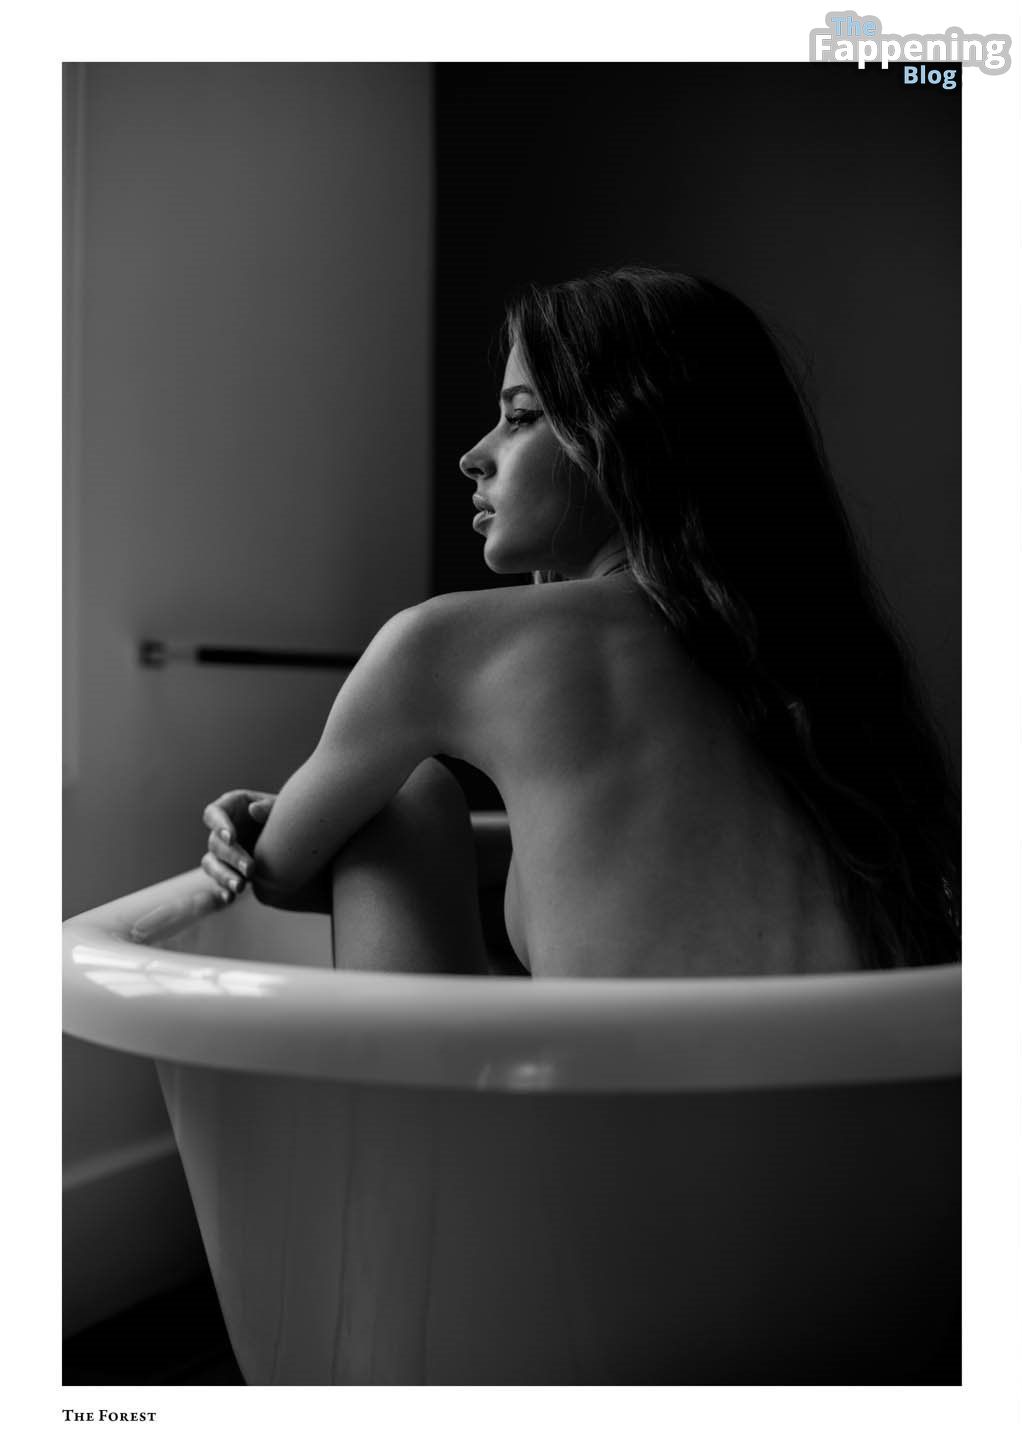 Laissa-Medeiros-Nude-Sexy-The-Fappening-Blog-3.jpg